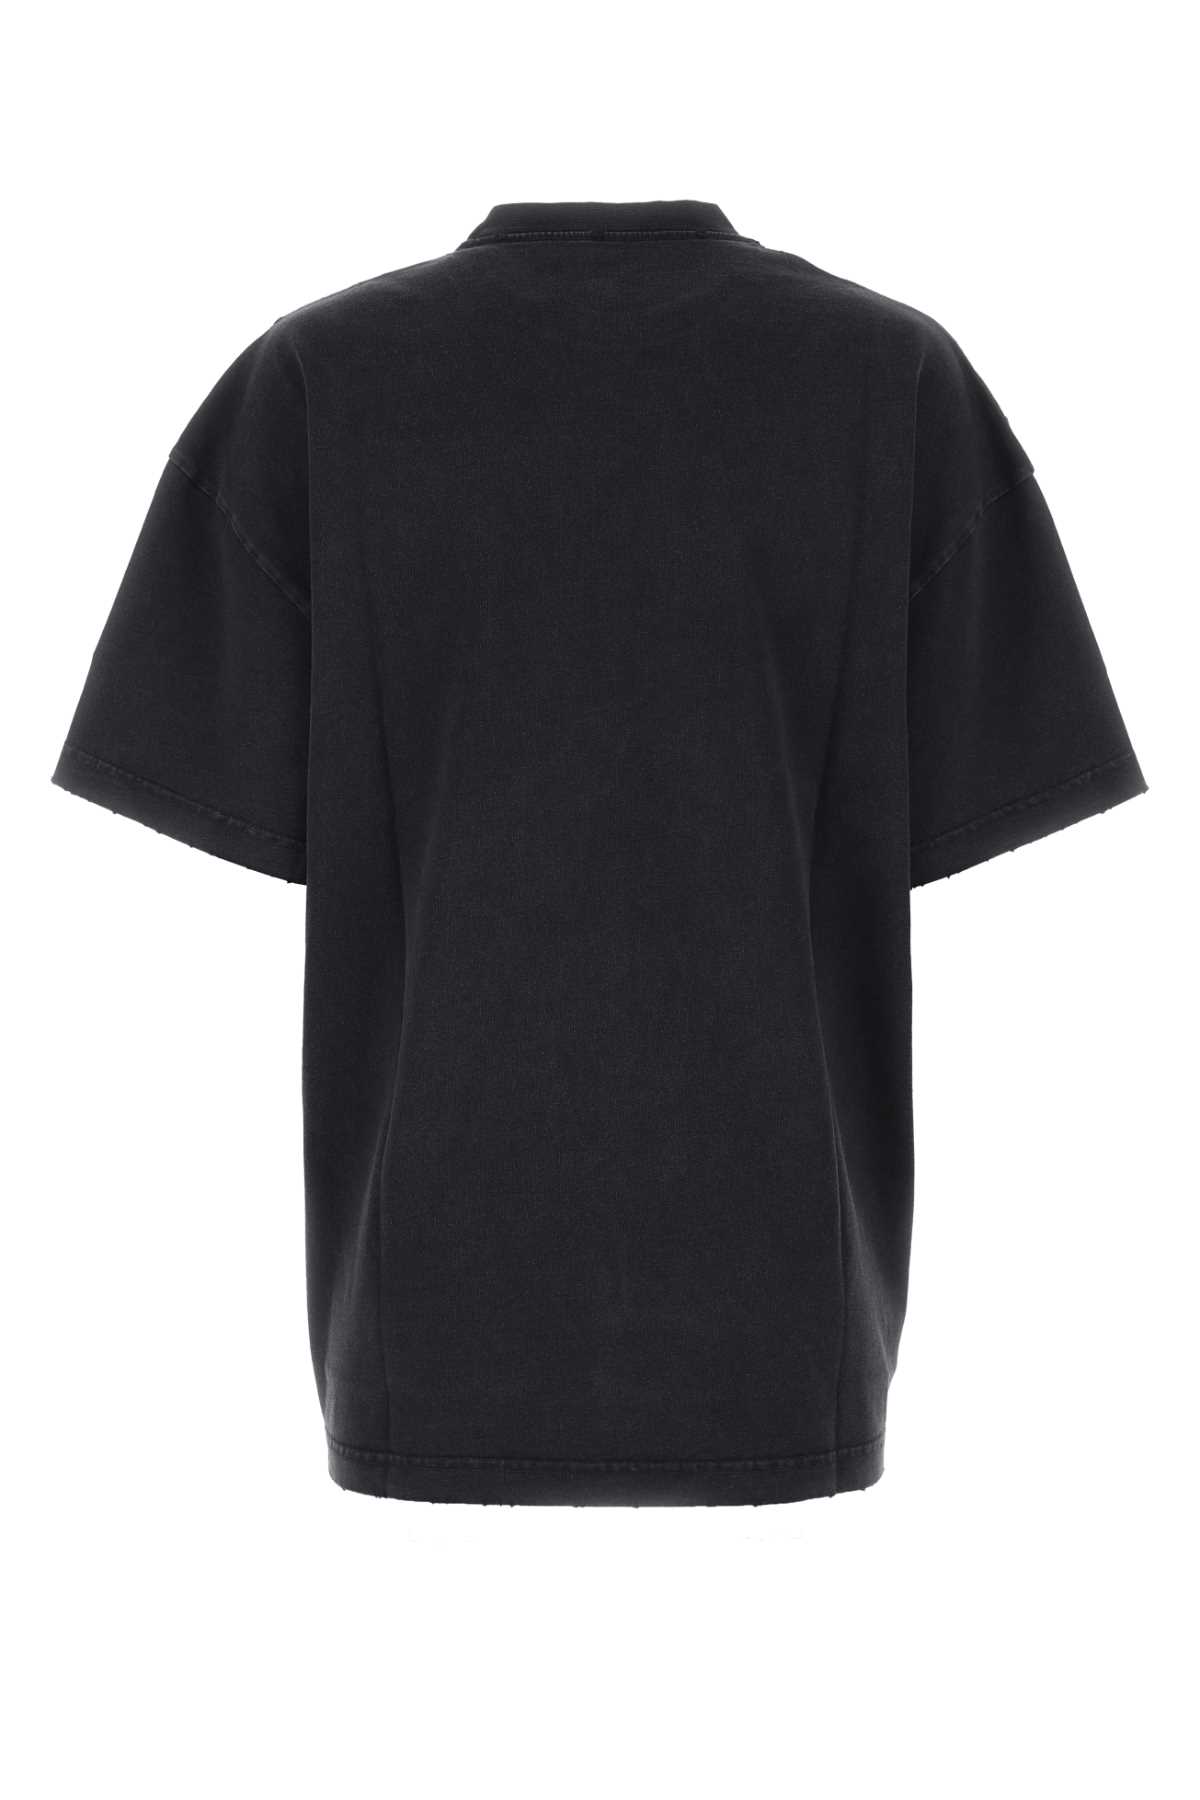 Versace Black Cotton T-shirt In 2b110